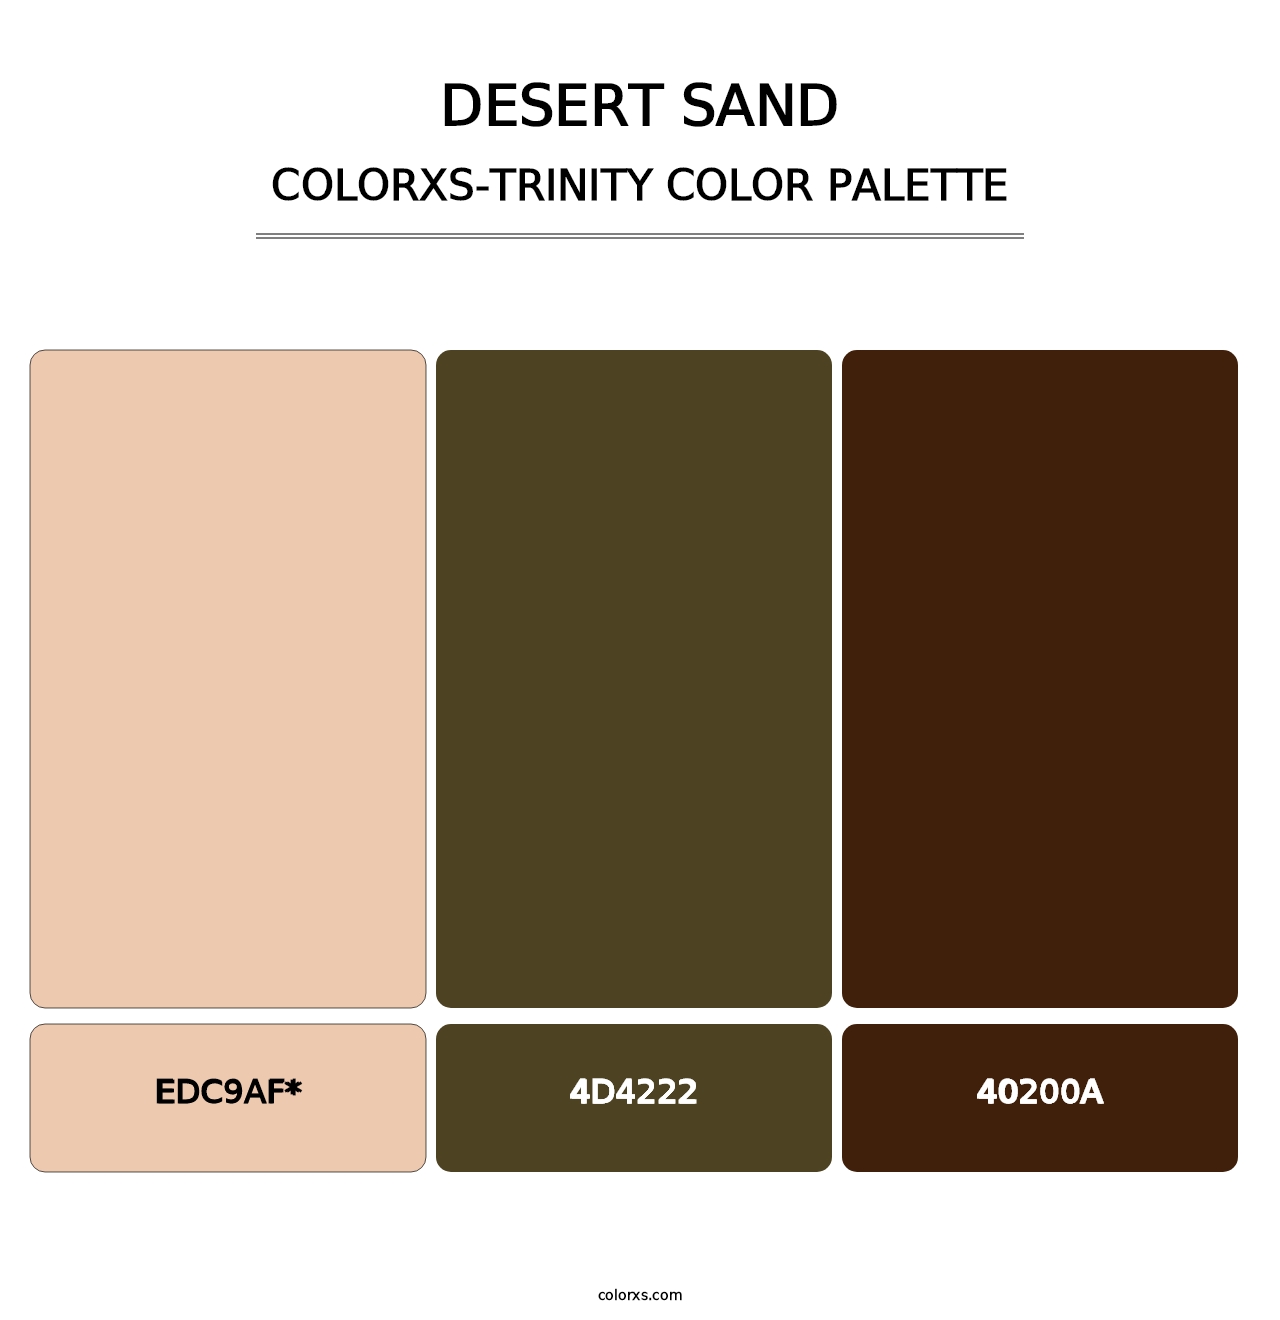 Desert Sand - Colorxs Trinity Palette